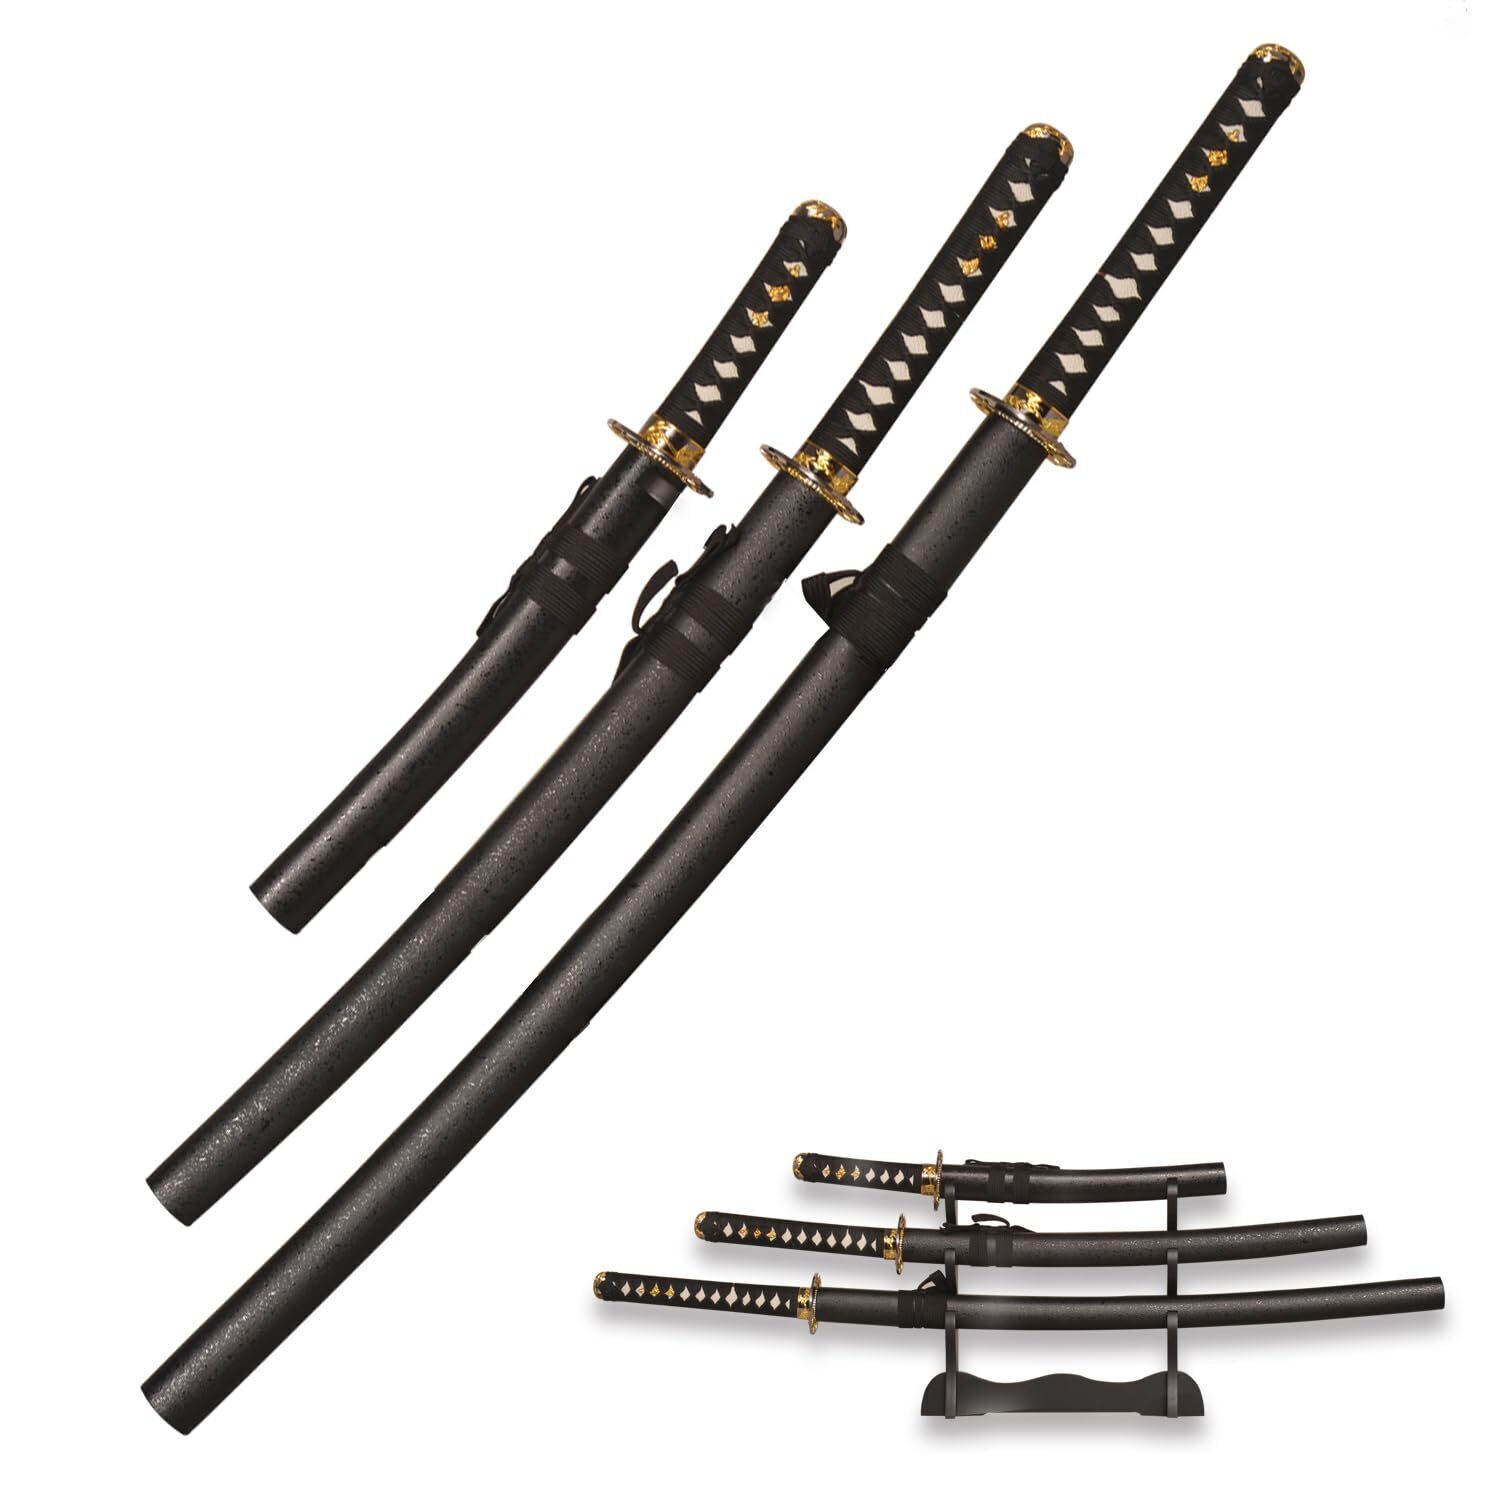 Handmade Carbon Steel Samurai Sword, Katana 3-Piece Set with Display Stand